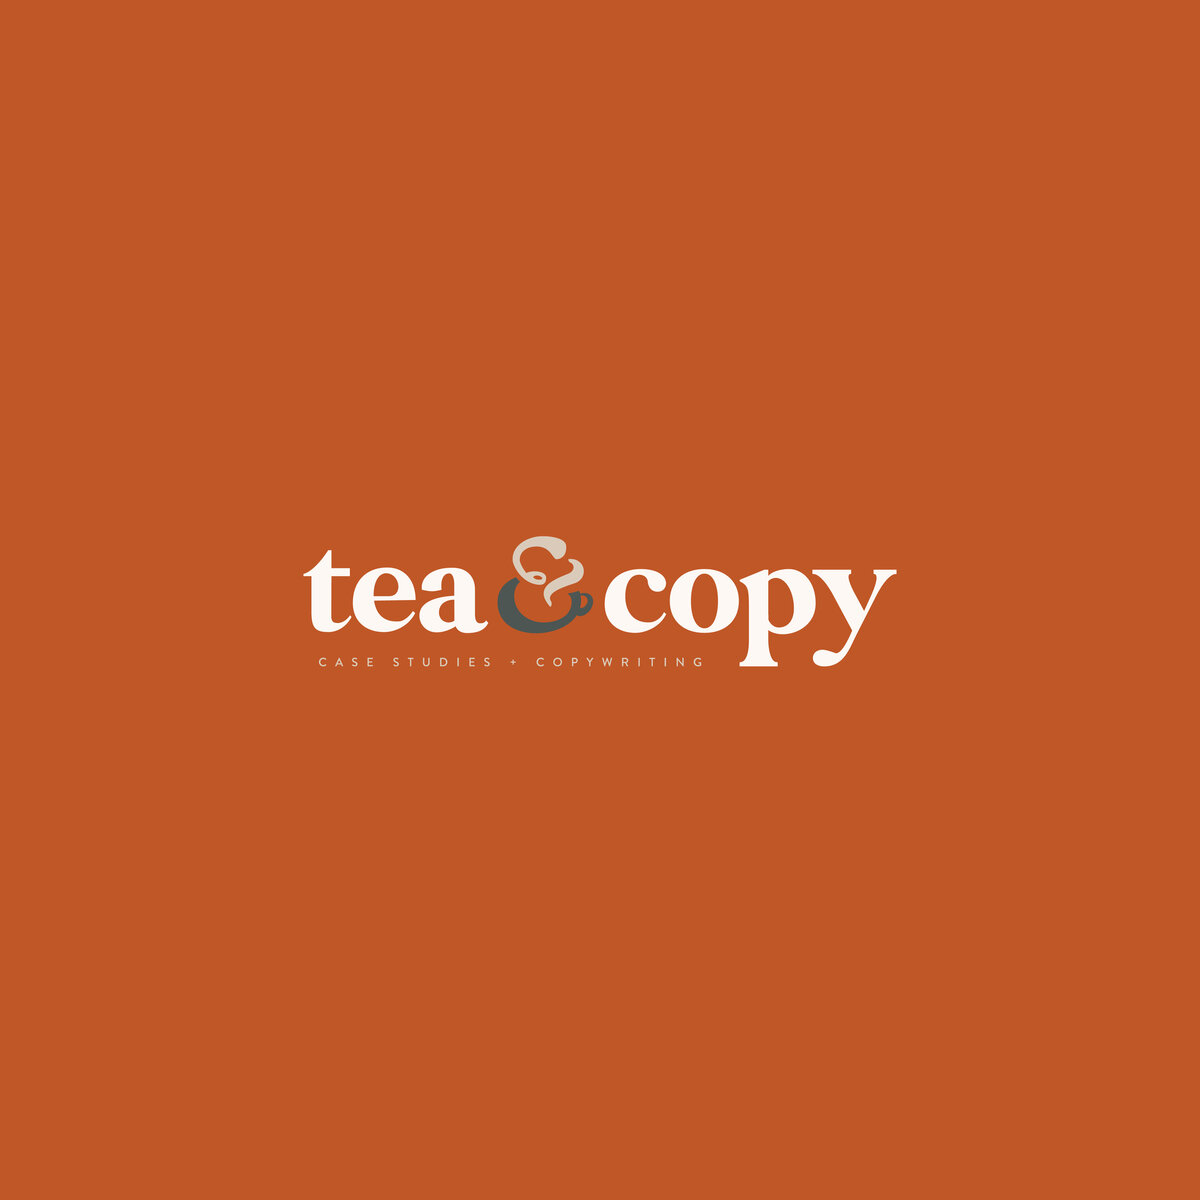 Tea & Copy logos [v1]-12